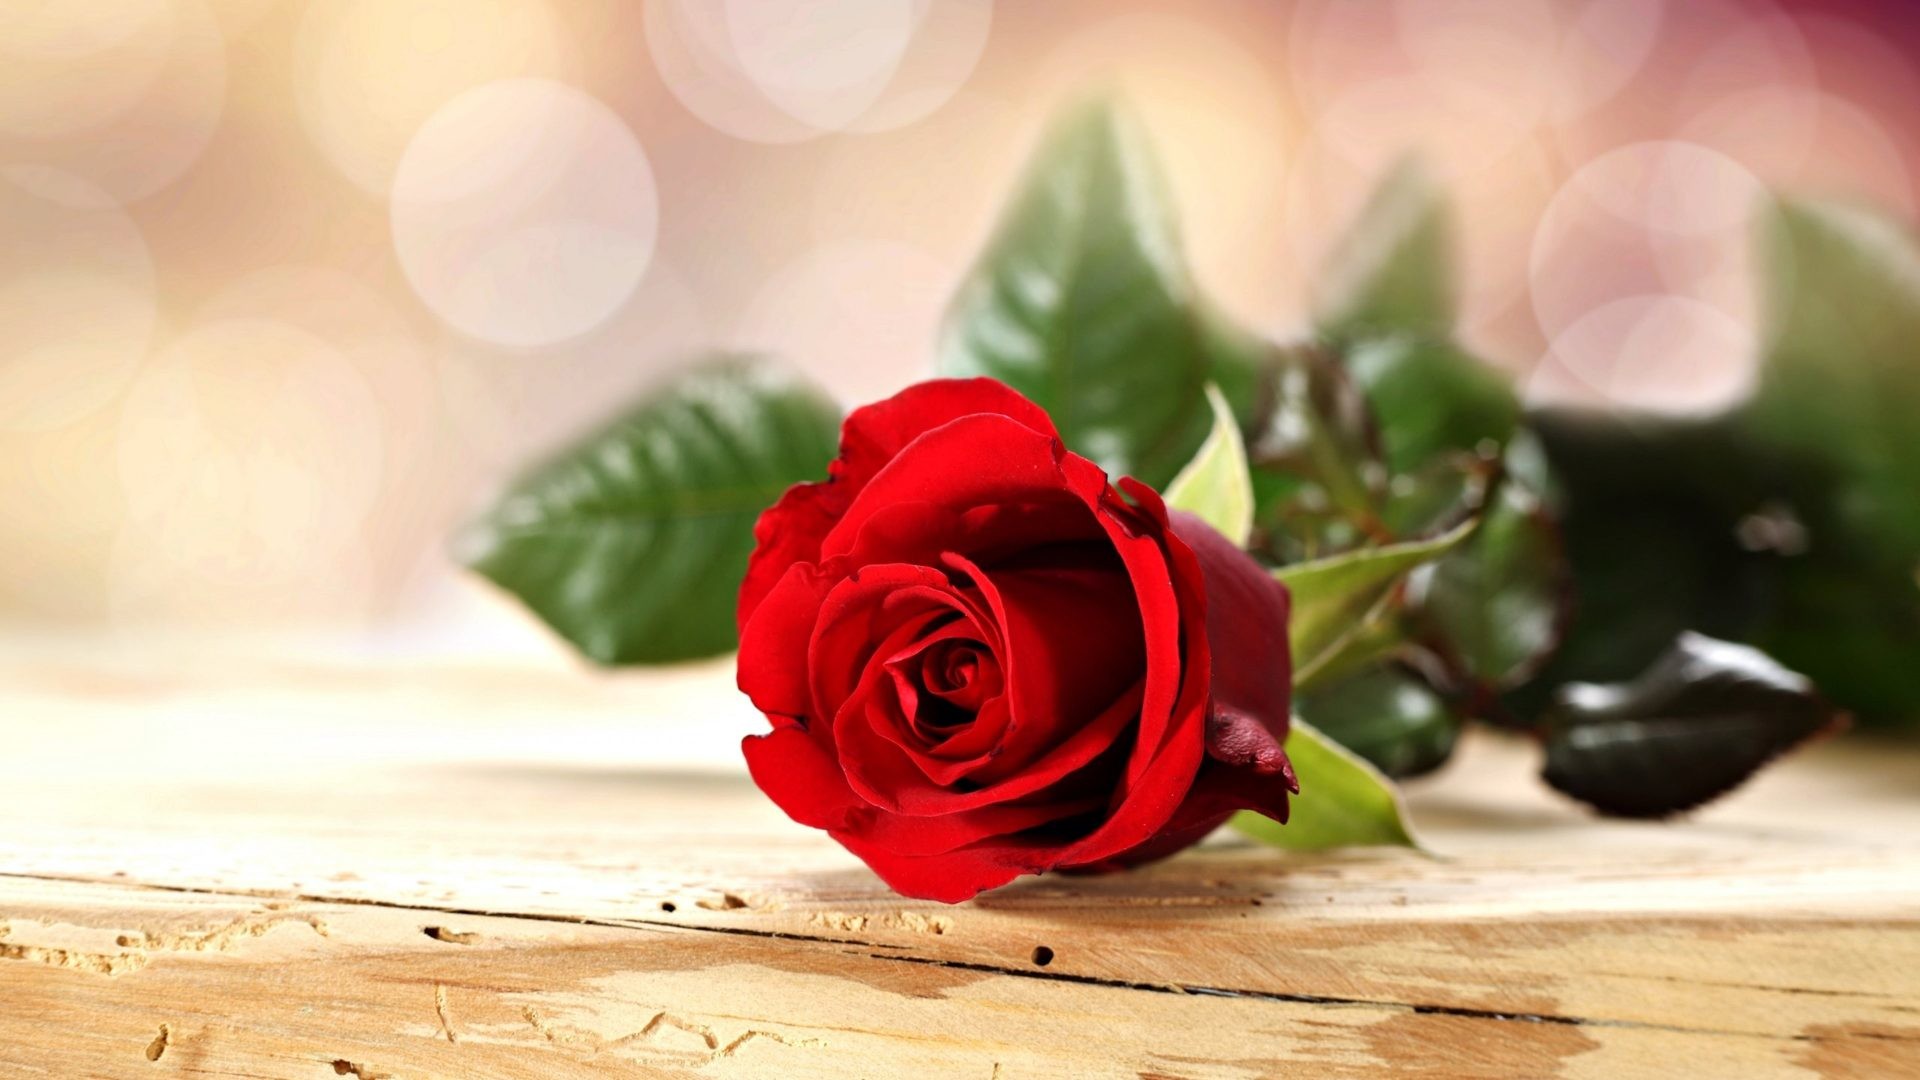 Love Rose Flower Images Hd | Best Flower Site